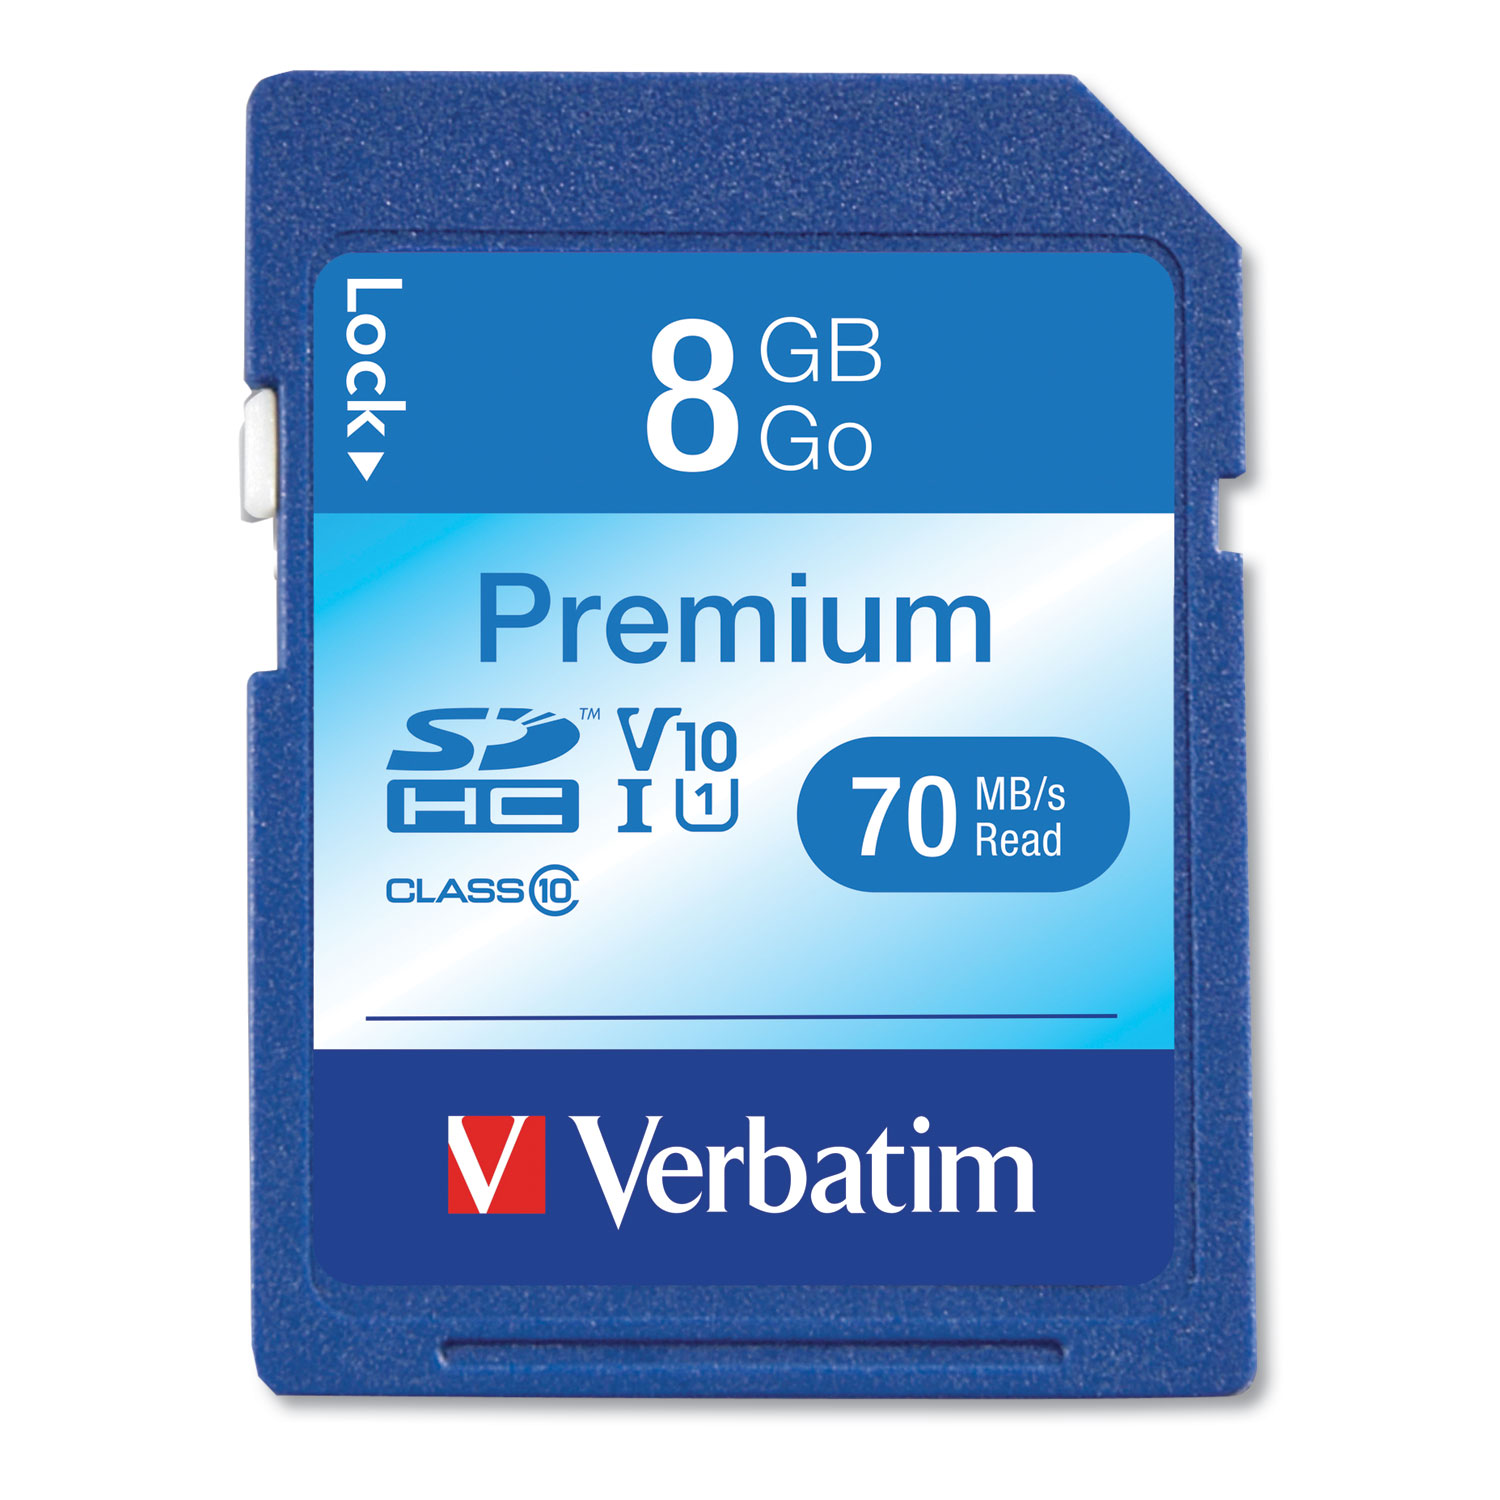  Verbatim 96318 8GB Premium SDHC Memory Card, UHS-1 V10 U1 Class 10, Up to 70MB/s Read Speed (VER96318) 